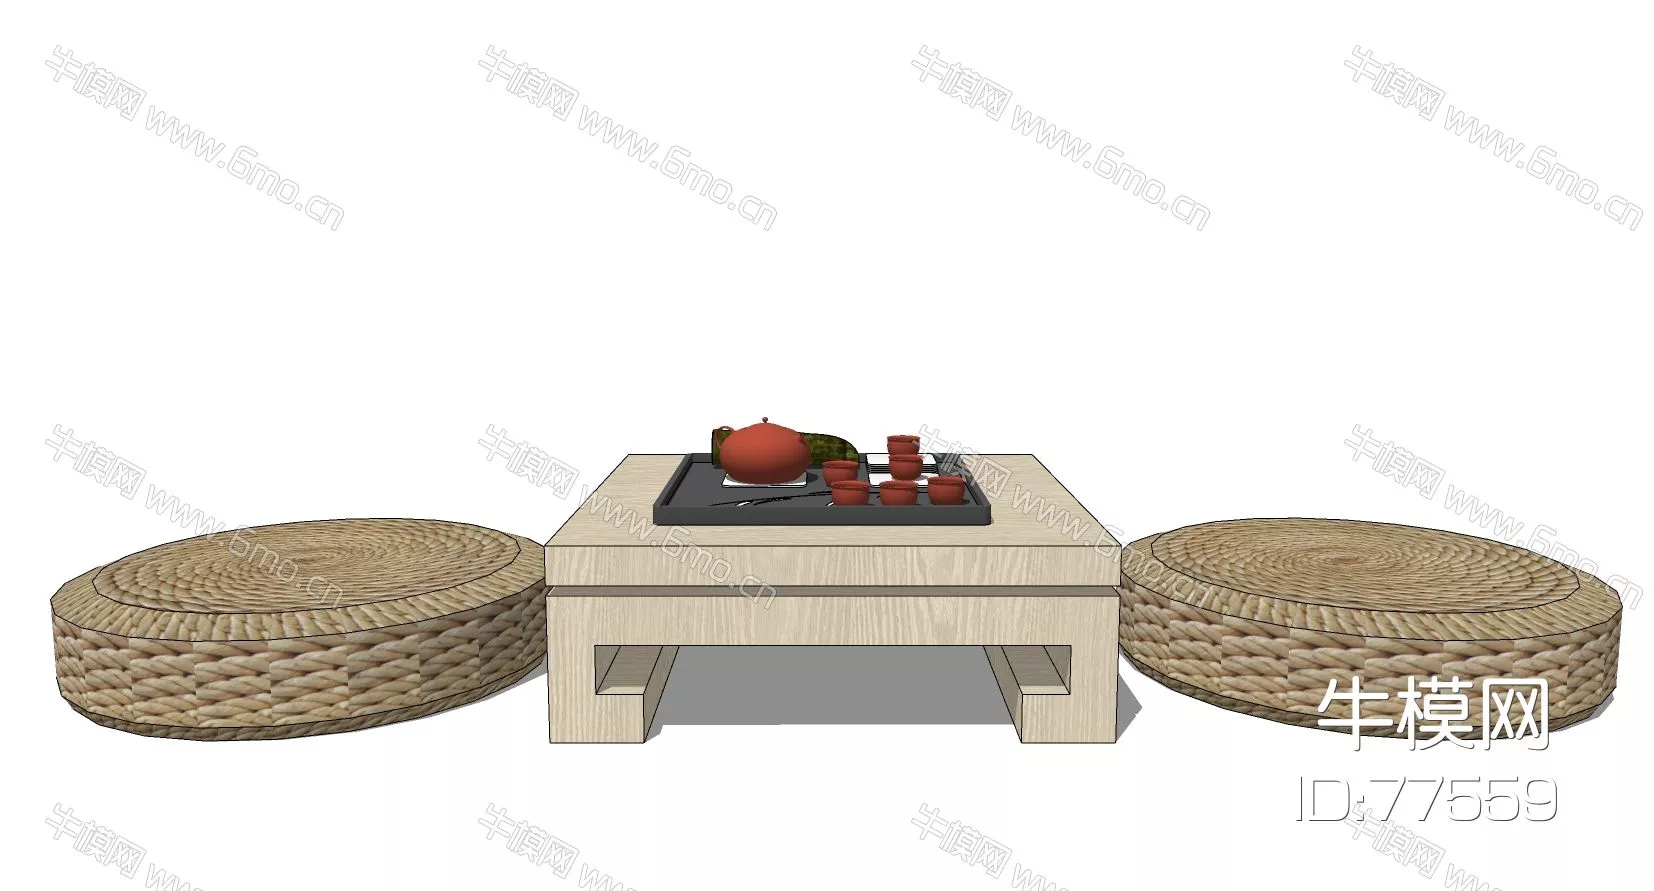 CHINESE TEA TABLE SET - SKETCHUP 3D MODEL - ENSCAPE - 77559